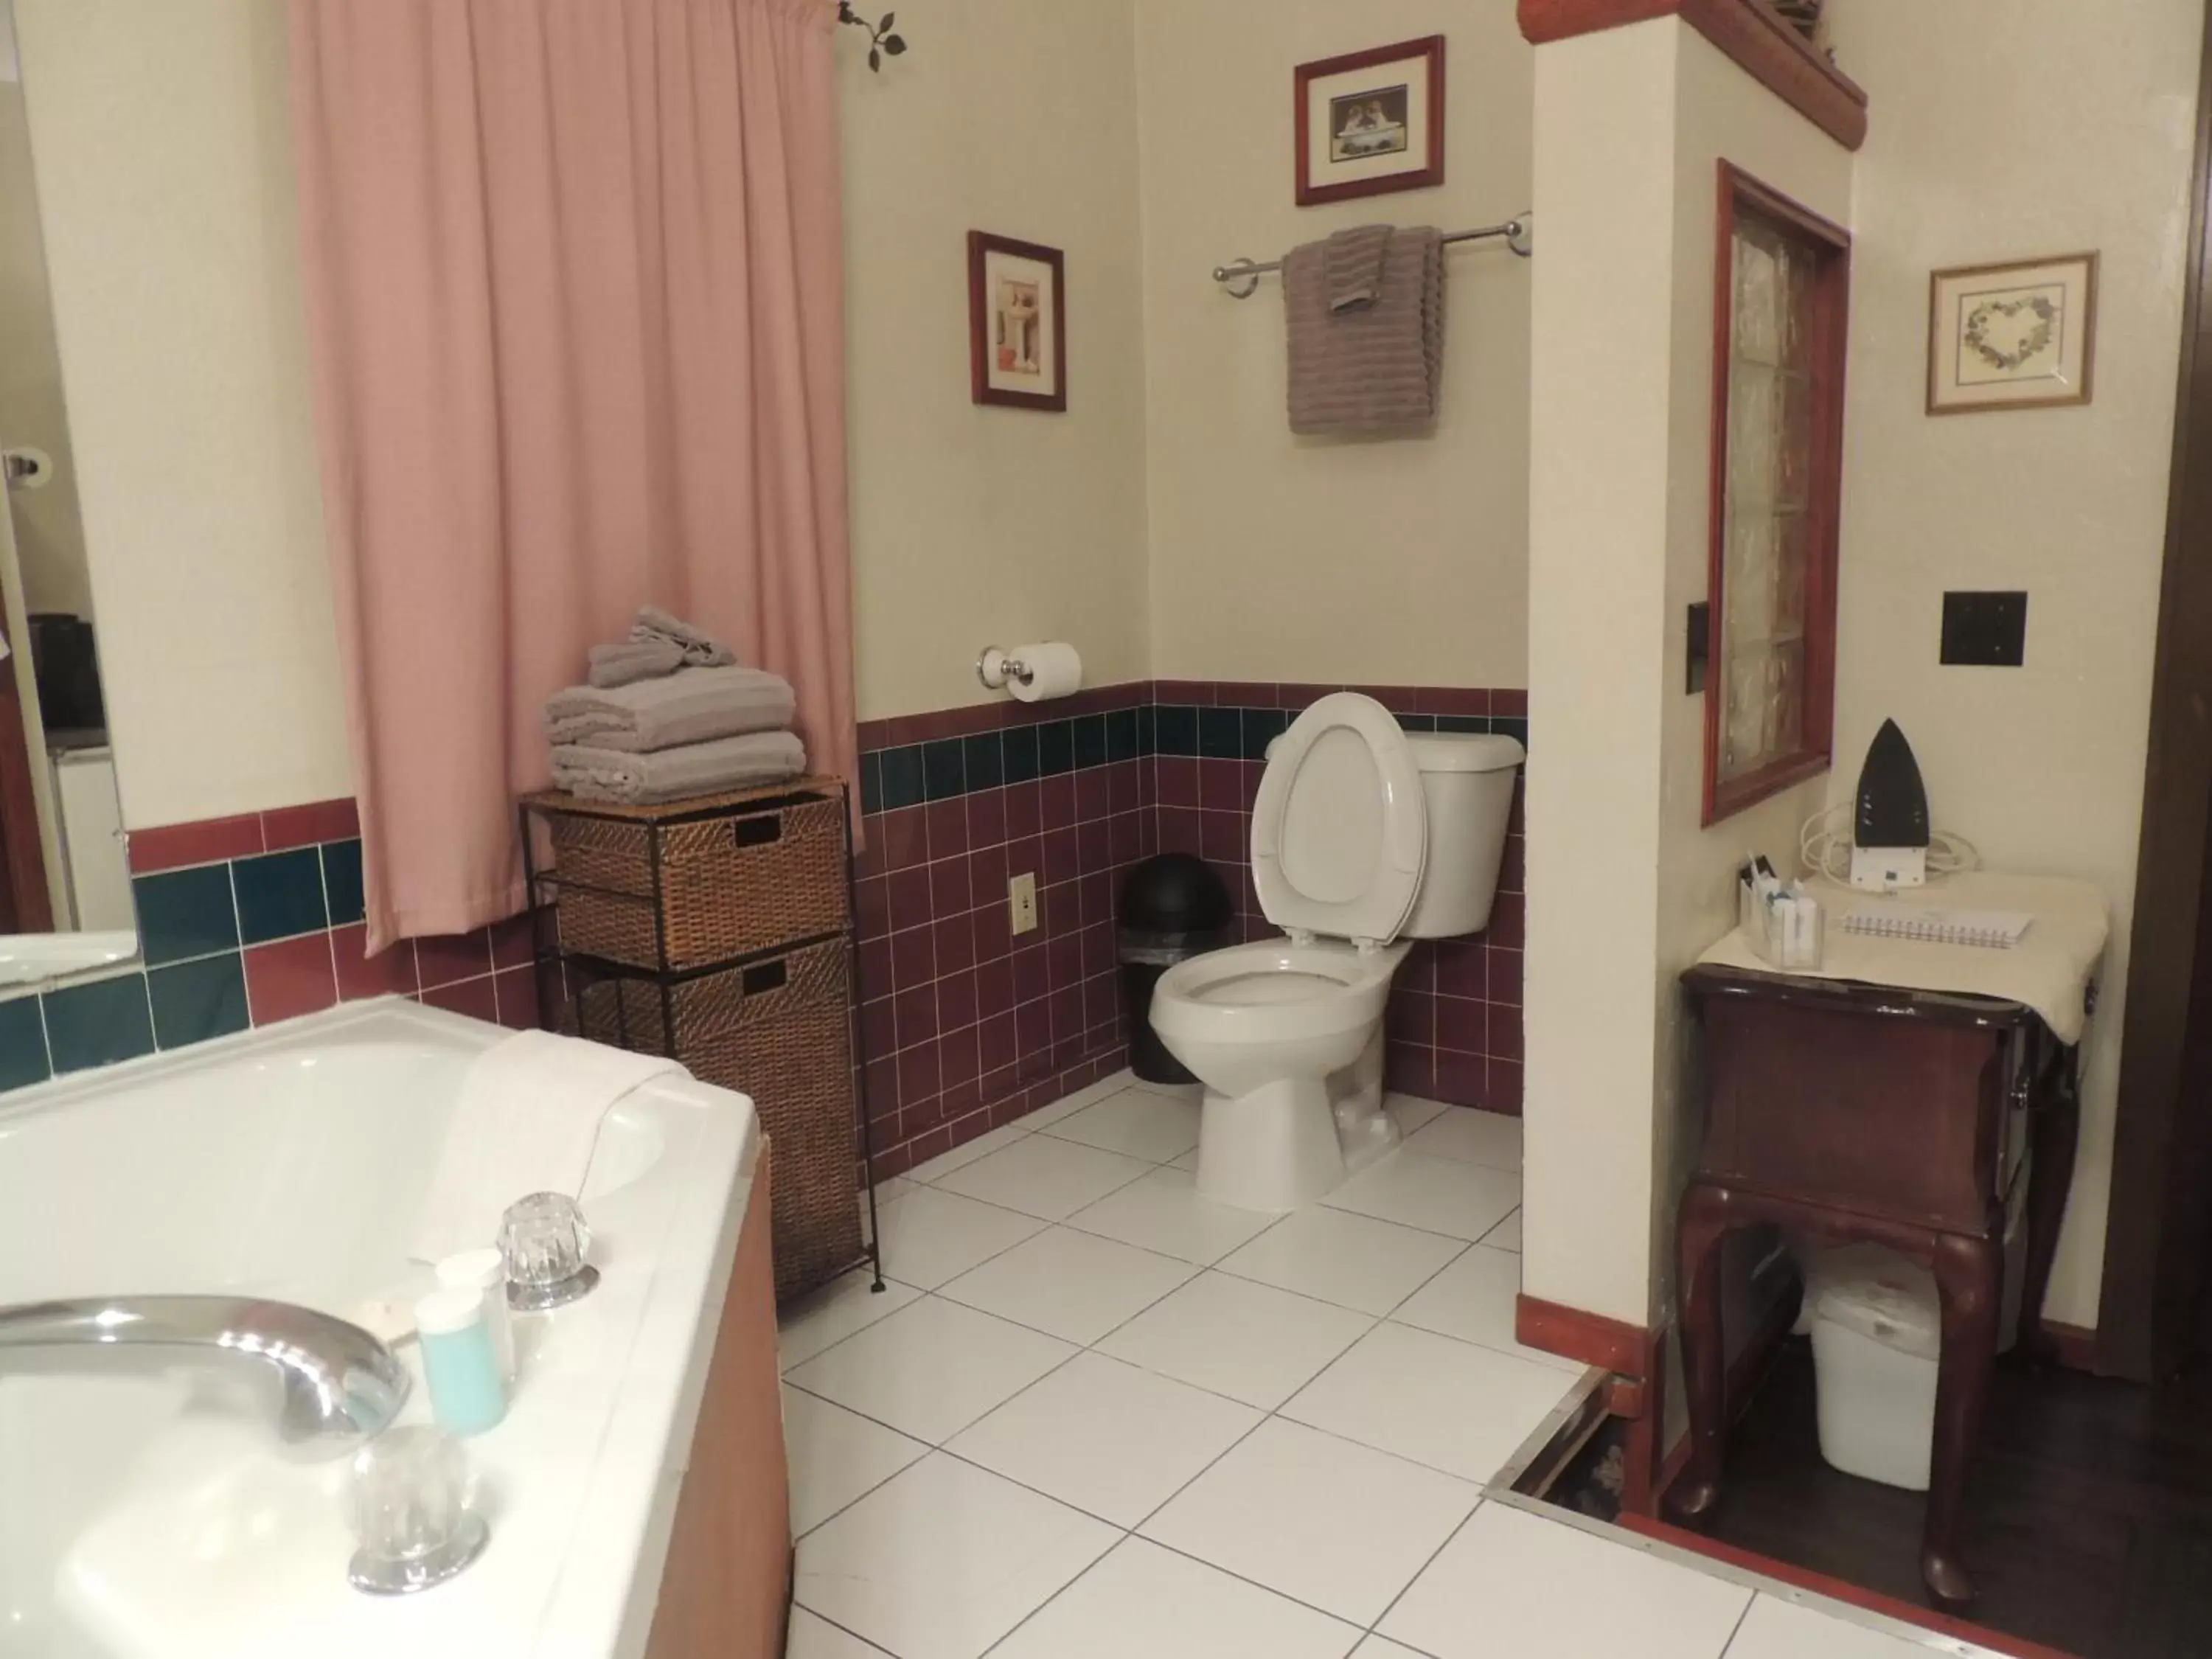 Bathroom in The Whispering Pines Inn